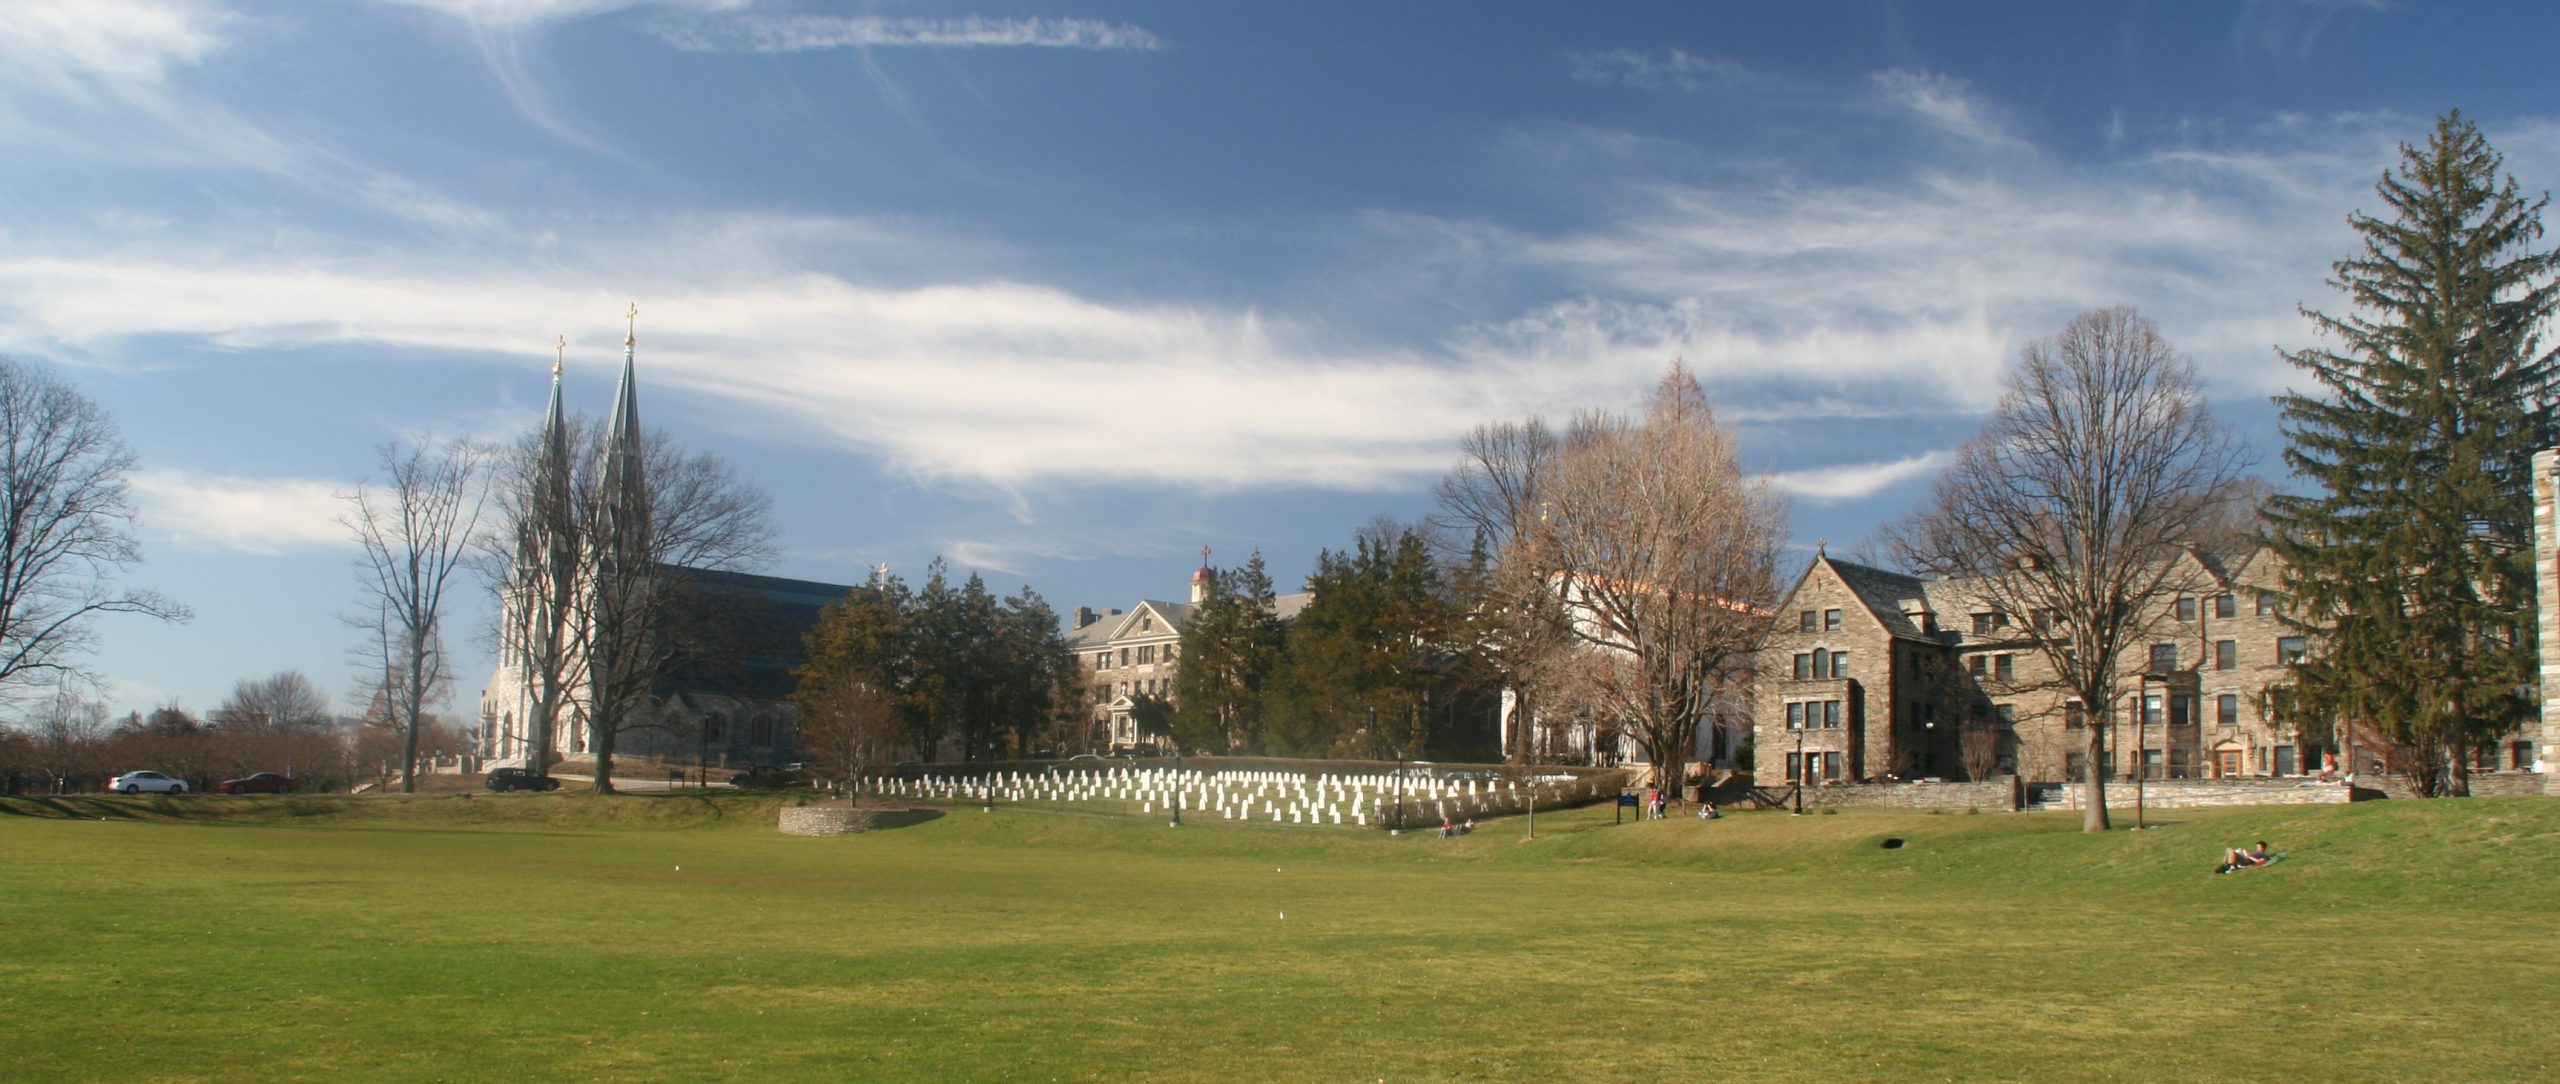 Image of Villanova University